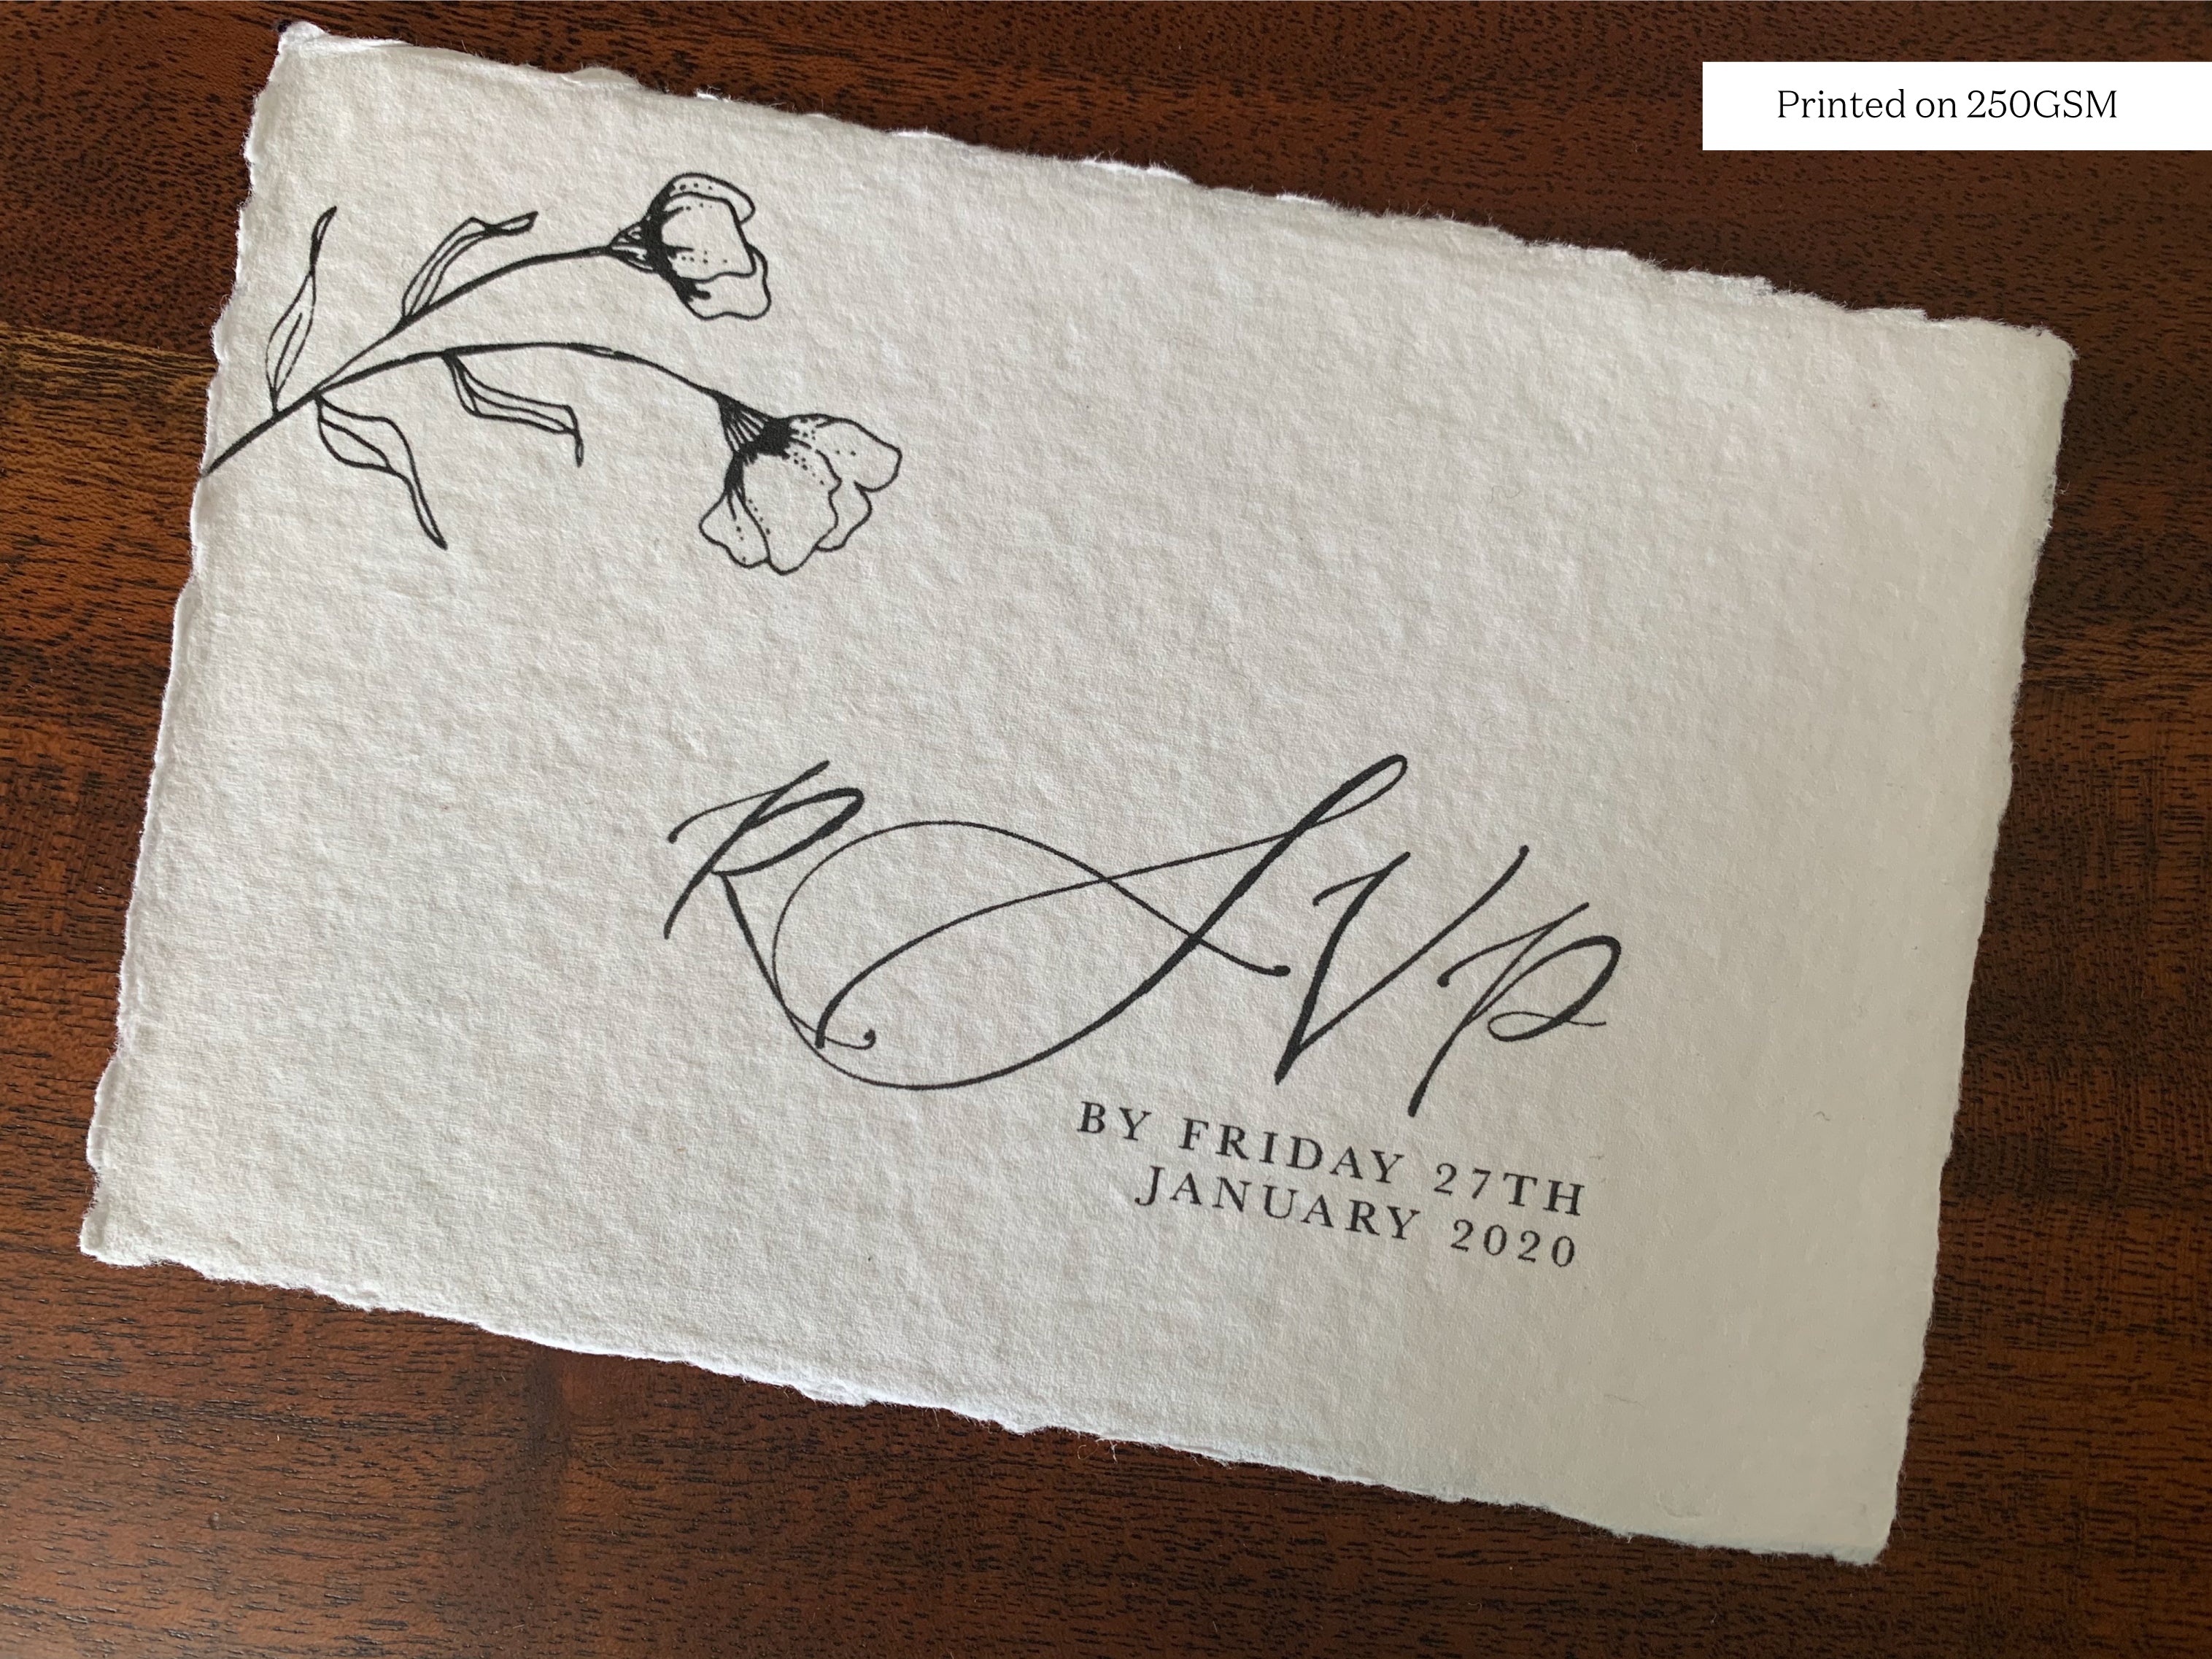 25 5.25 X8.25 A5 Cards Deckled Edge Paper White Cotton Rag Paper Handmade  Paper Wedding Invitation 